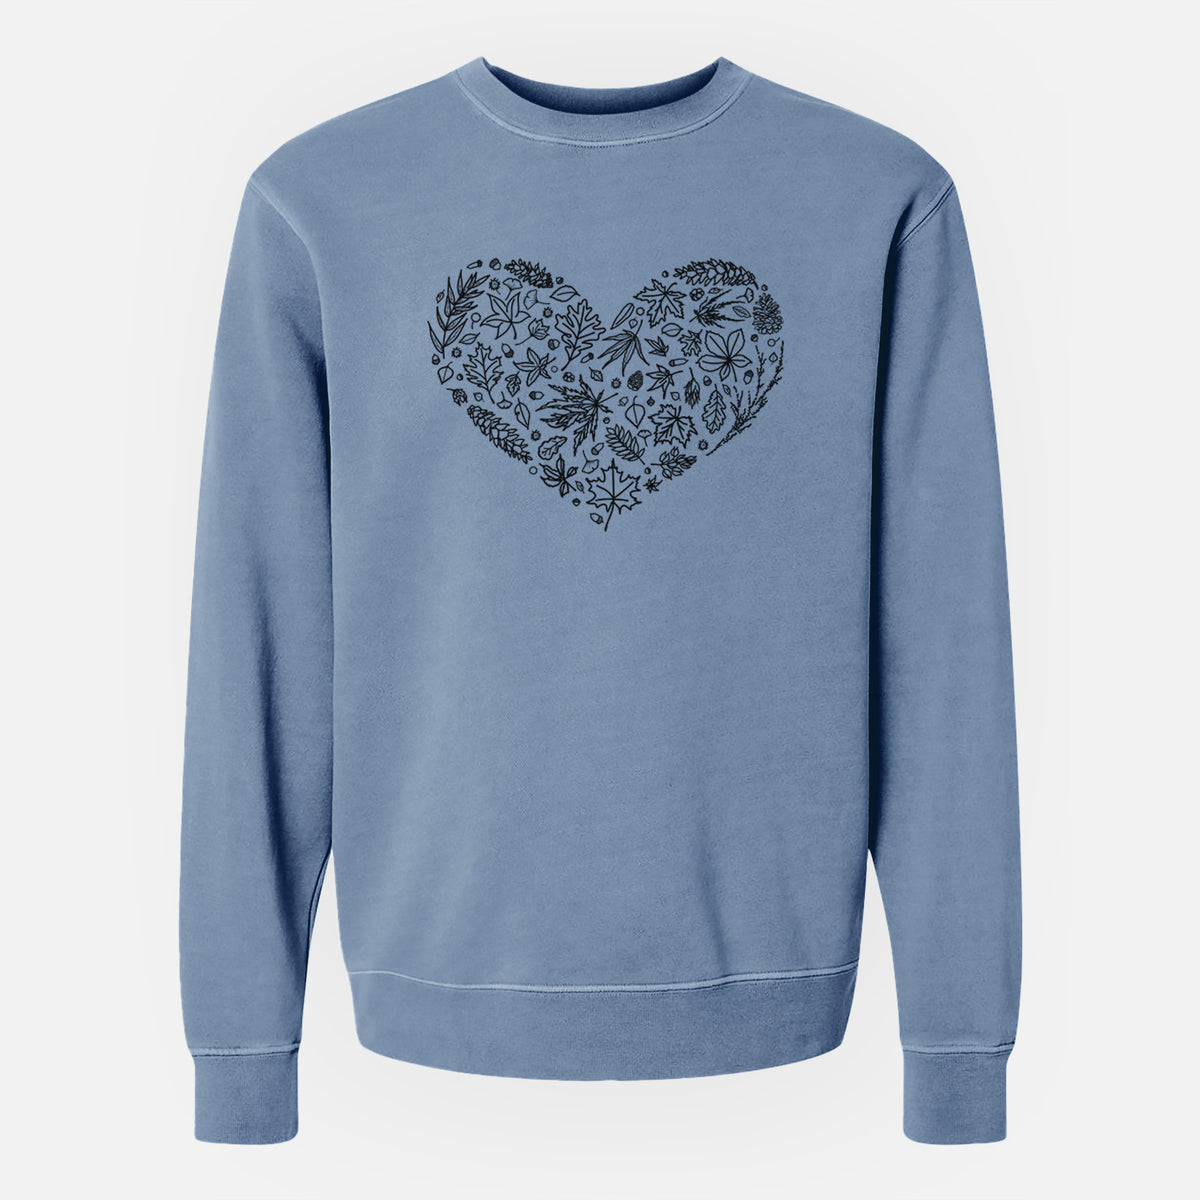 Heart Full of Autumn Leaves - Unisex Pigment Dyed Crew Sweatshirt